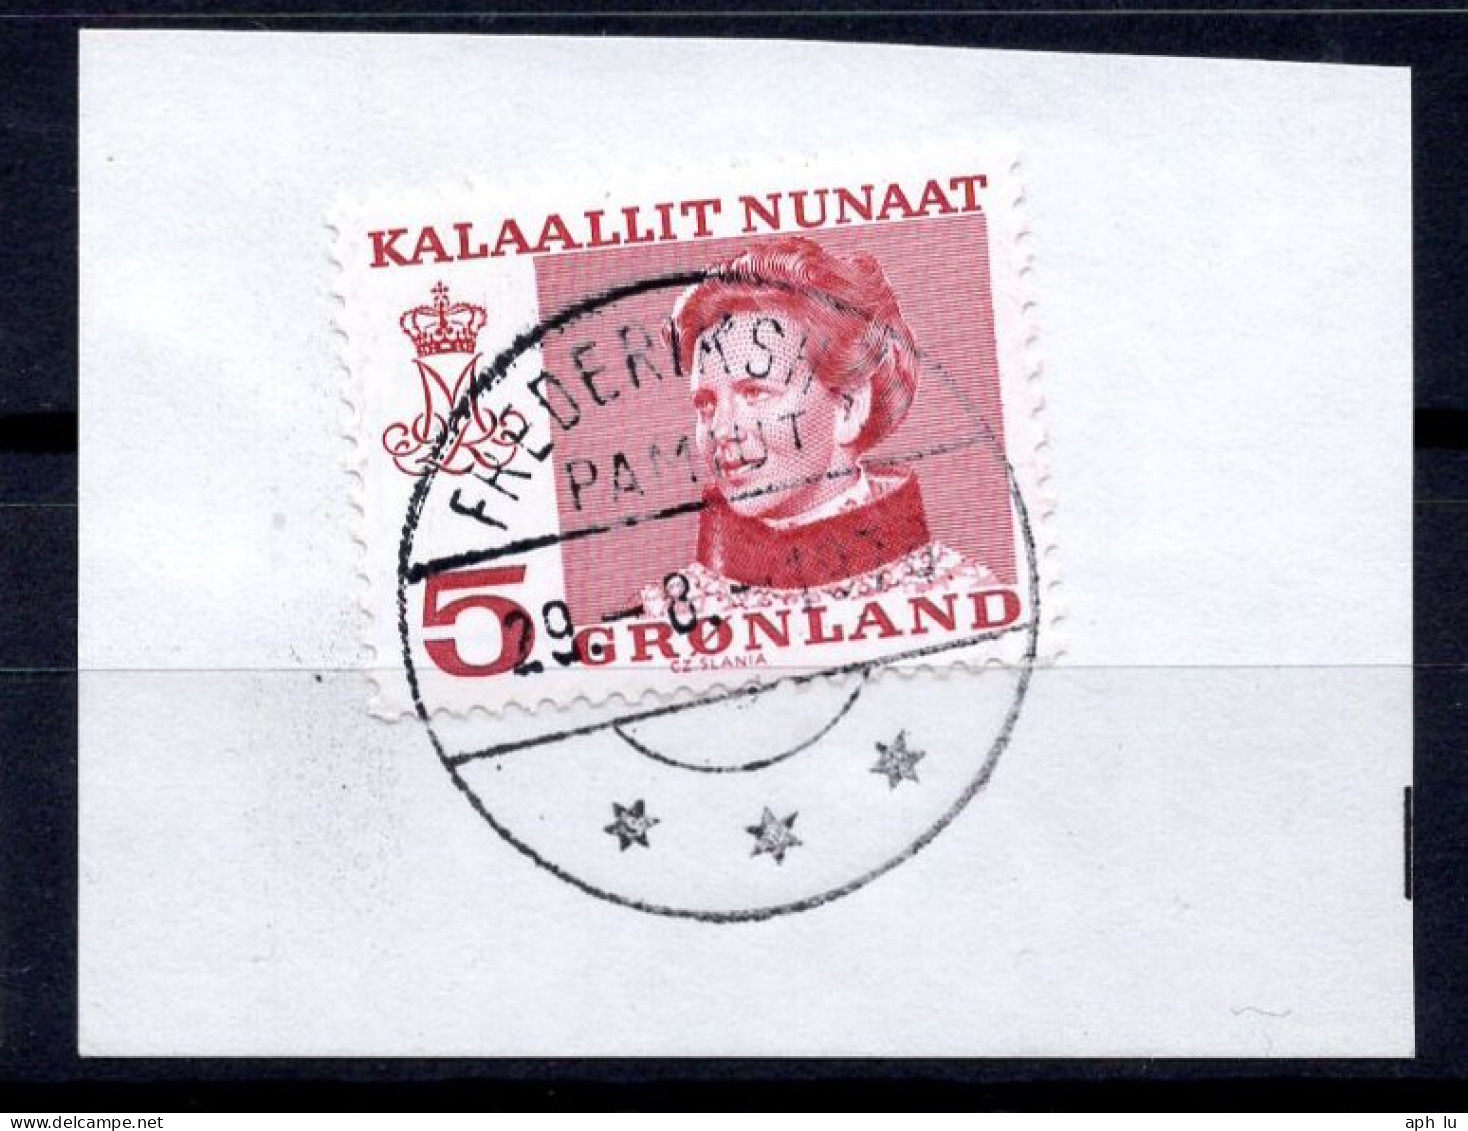 Ausschnitt (ac8476) - Used Stamps